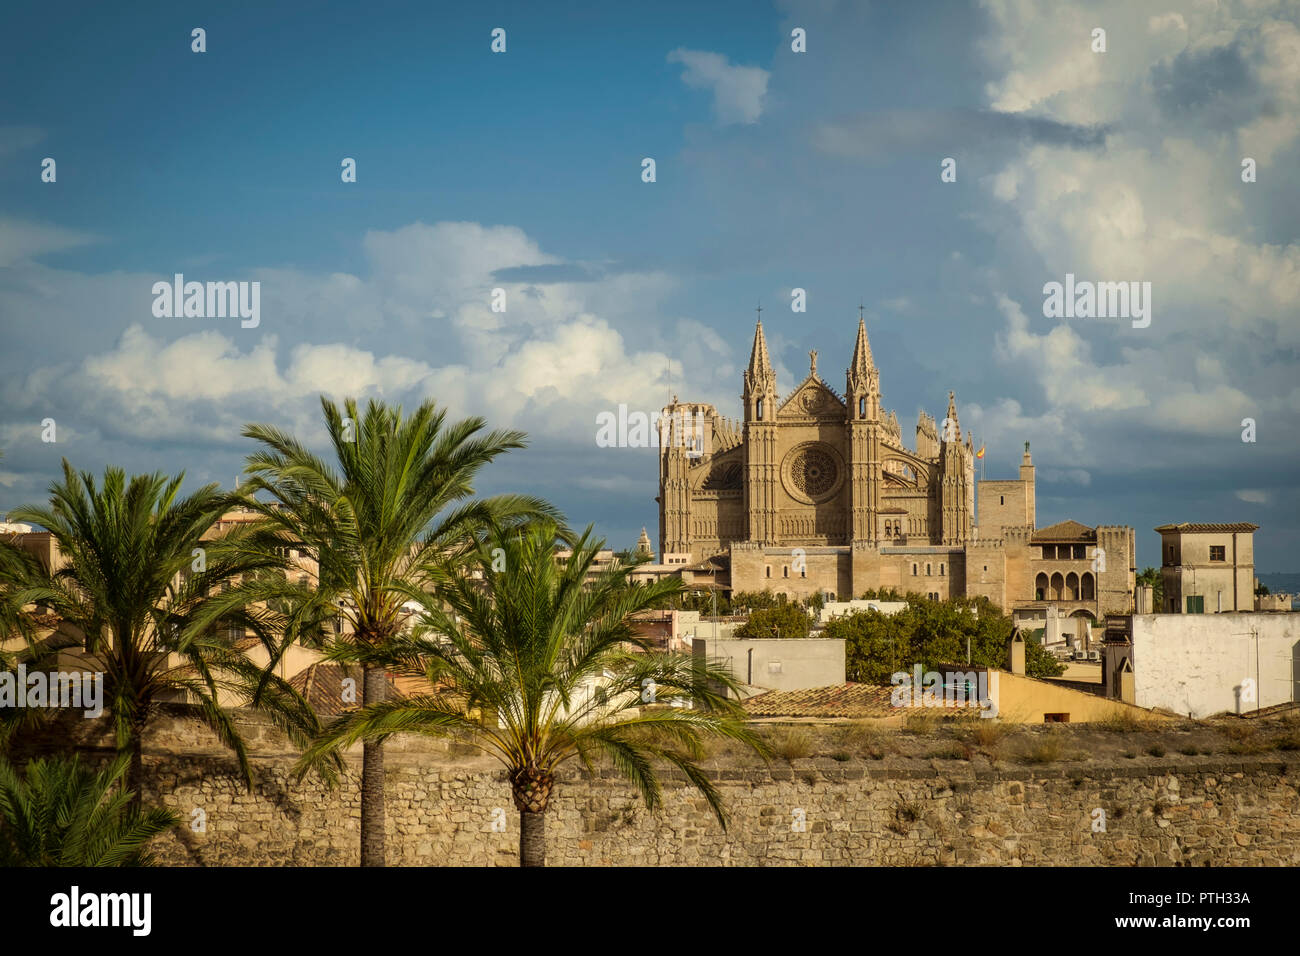 The old city walls and The Cathedral of Santa Maria de Palma, Mallorca, Spain. Stock Photo